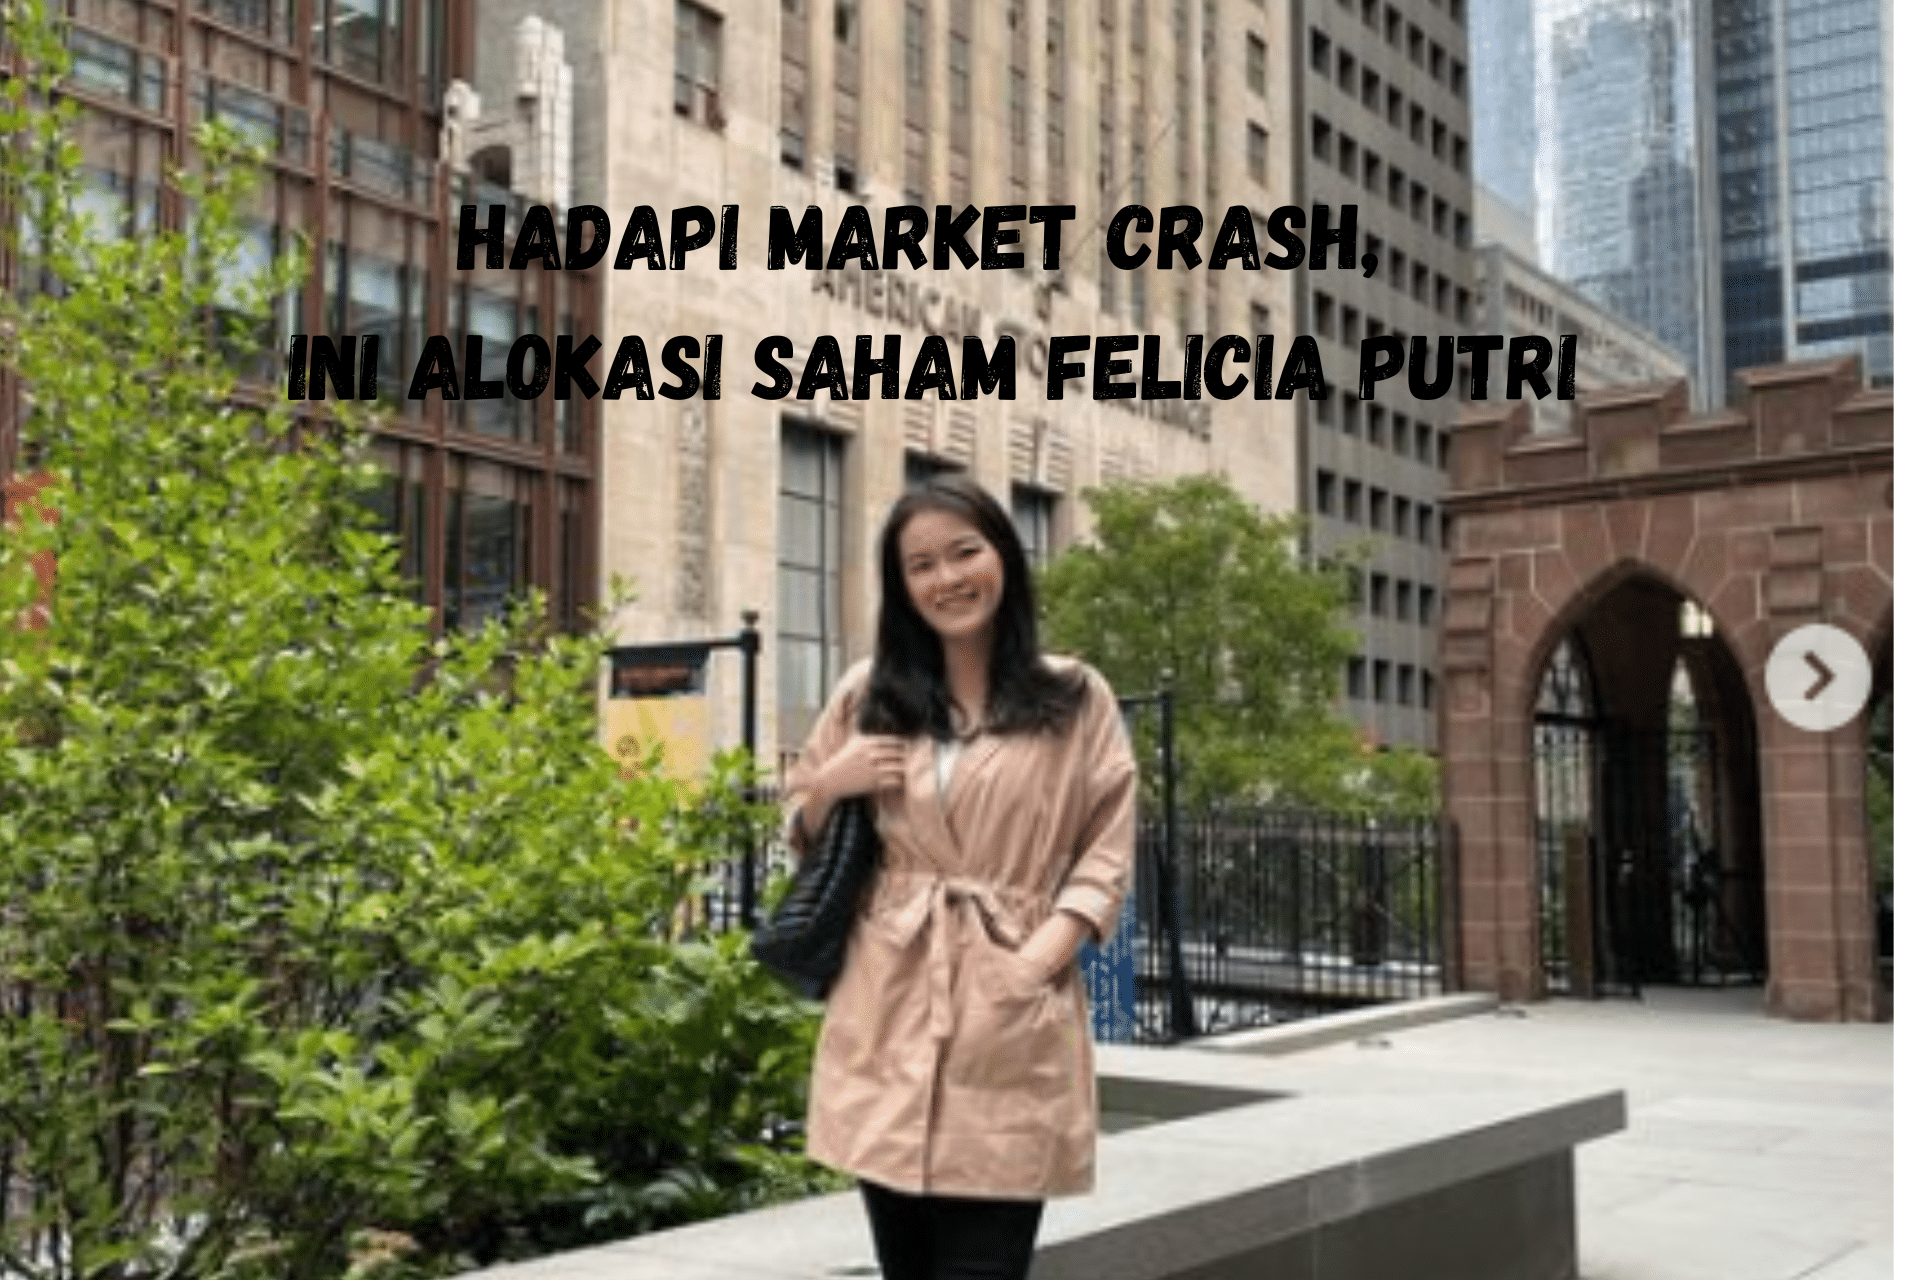 Hadapi Market Crash, Ini Alokasi Saham Felicia Putri